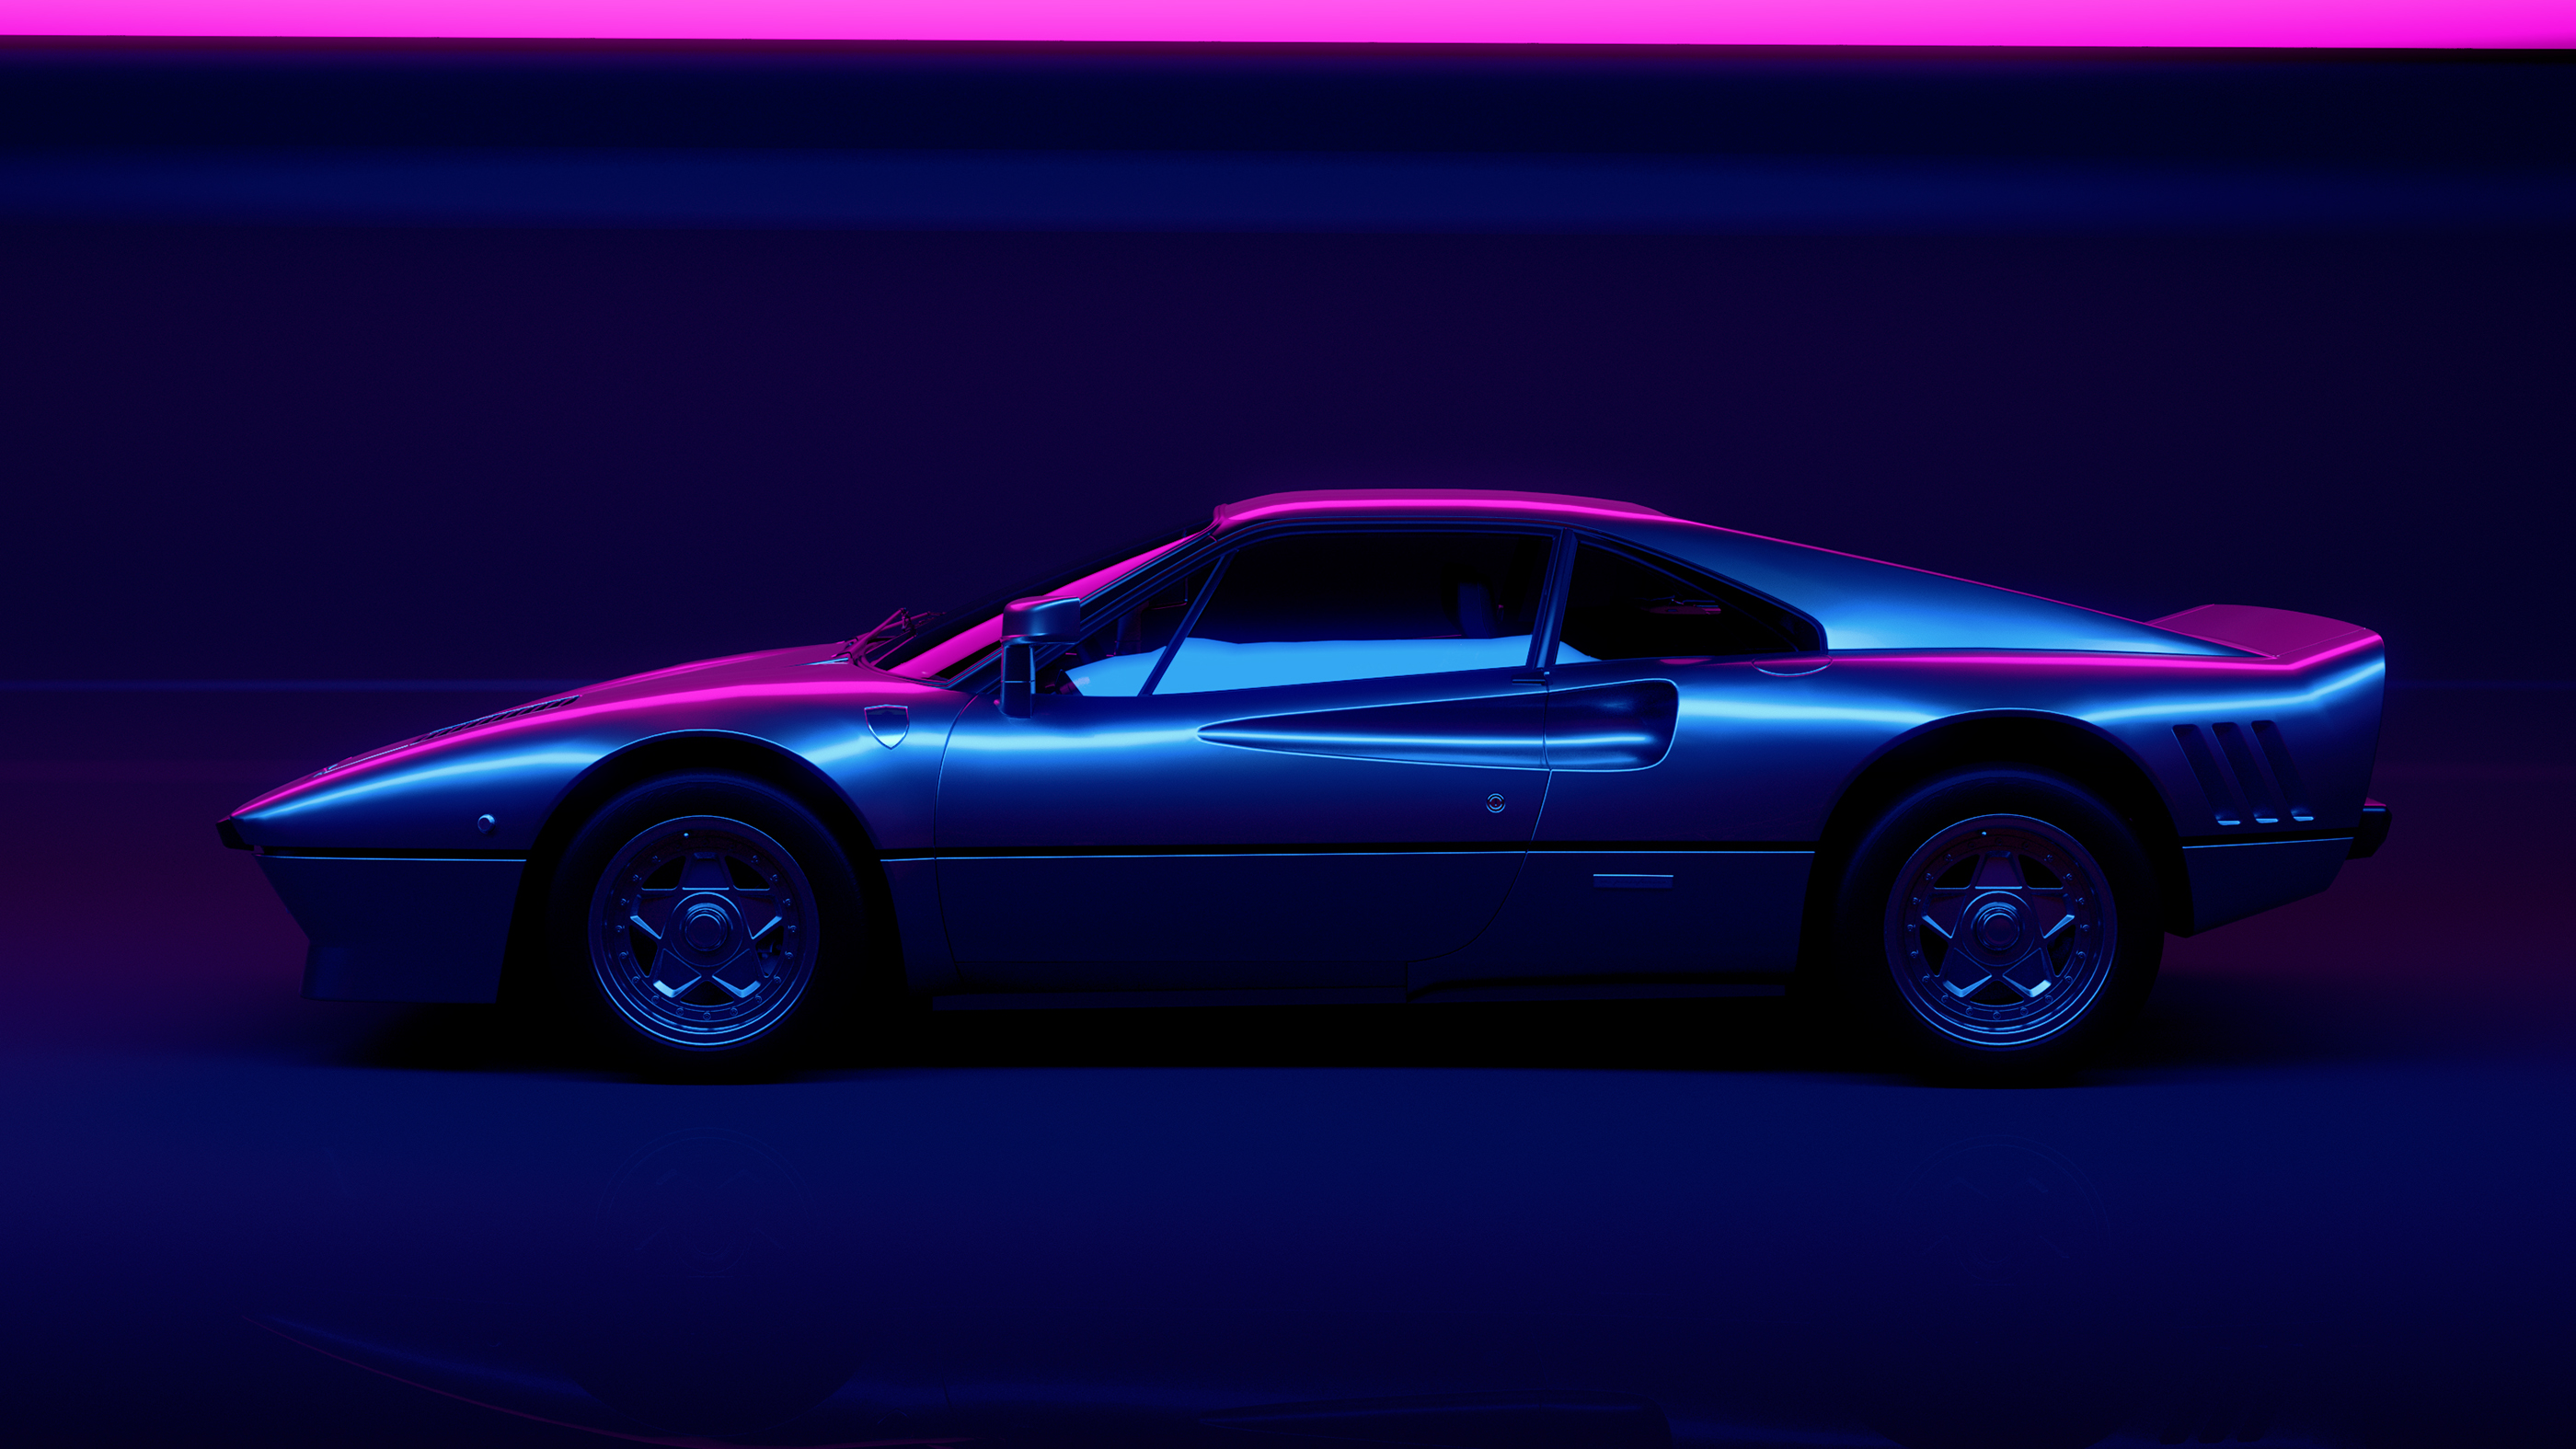 General 2800x1575 car vaporwave vehicle purple Ferrari 308 side view Ferrari digital art simple background